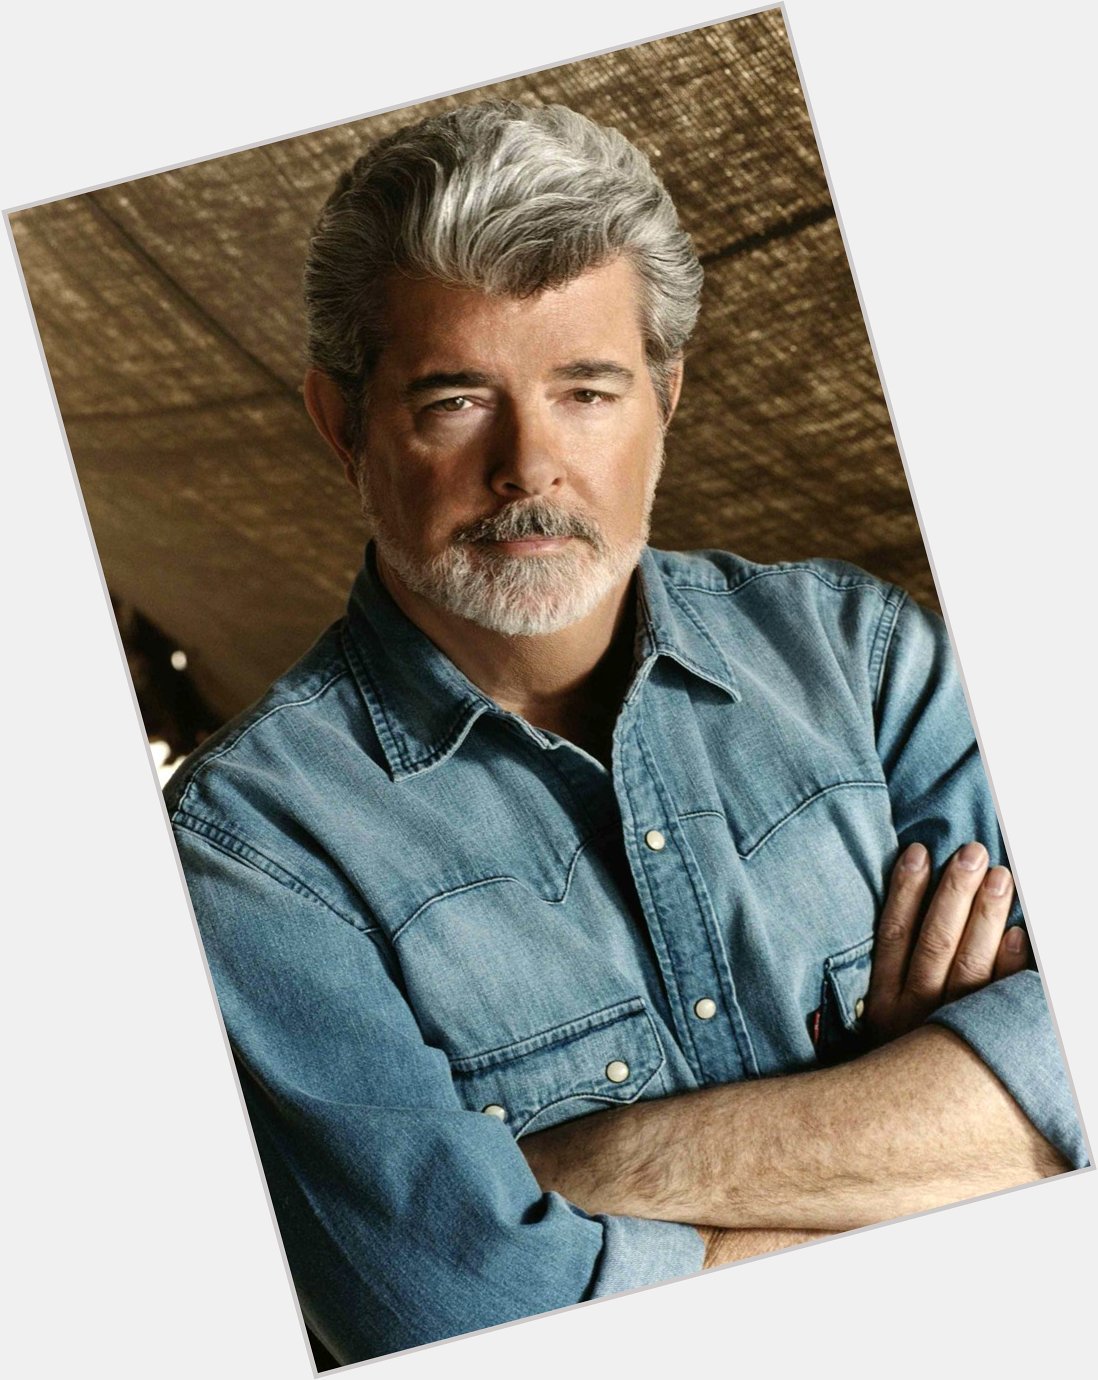 Happy birthday to the legendary George Lucas! 